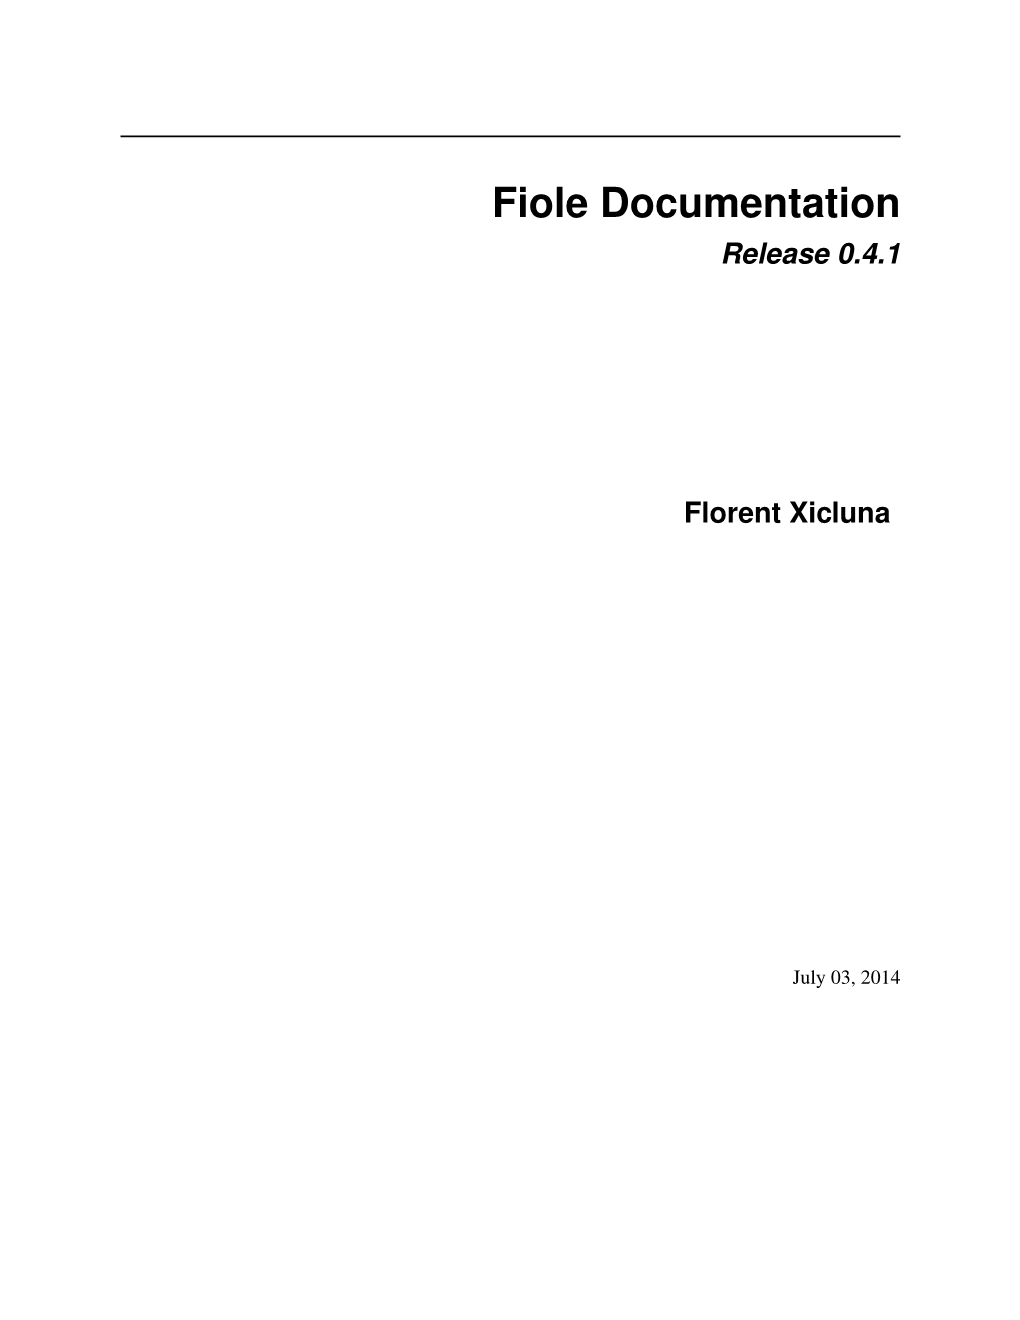 Fiole Documentation Release 0.4.1 Florent